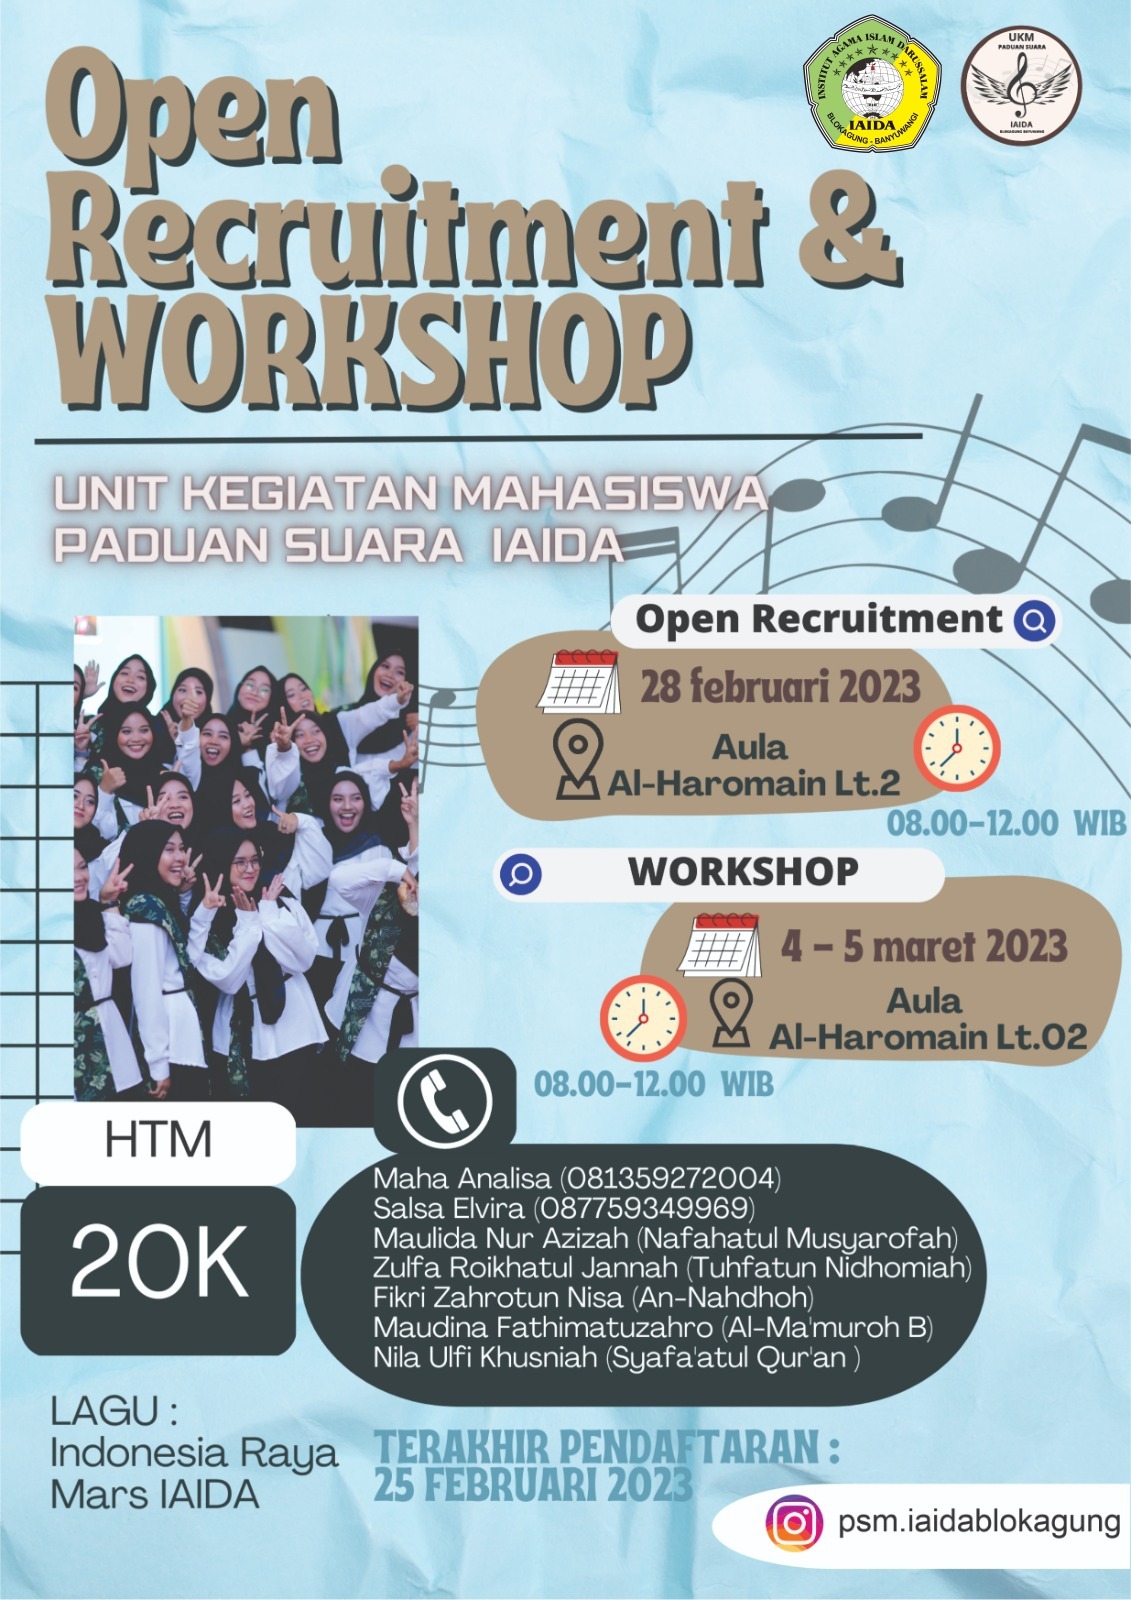 Recruitment and Workshop UKM Paduan Suara IAIDA